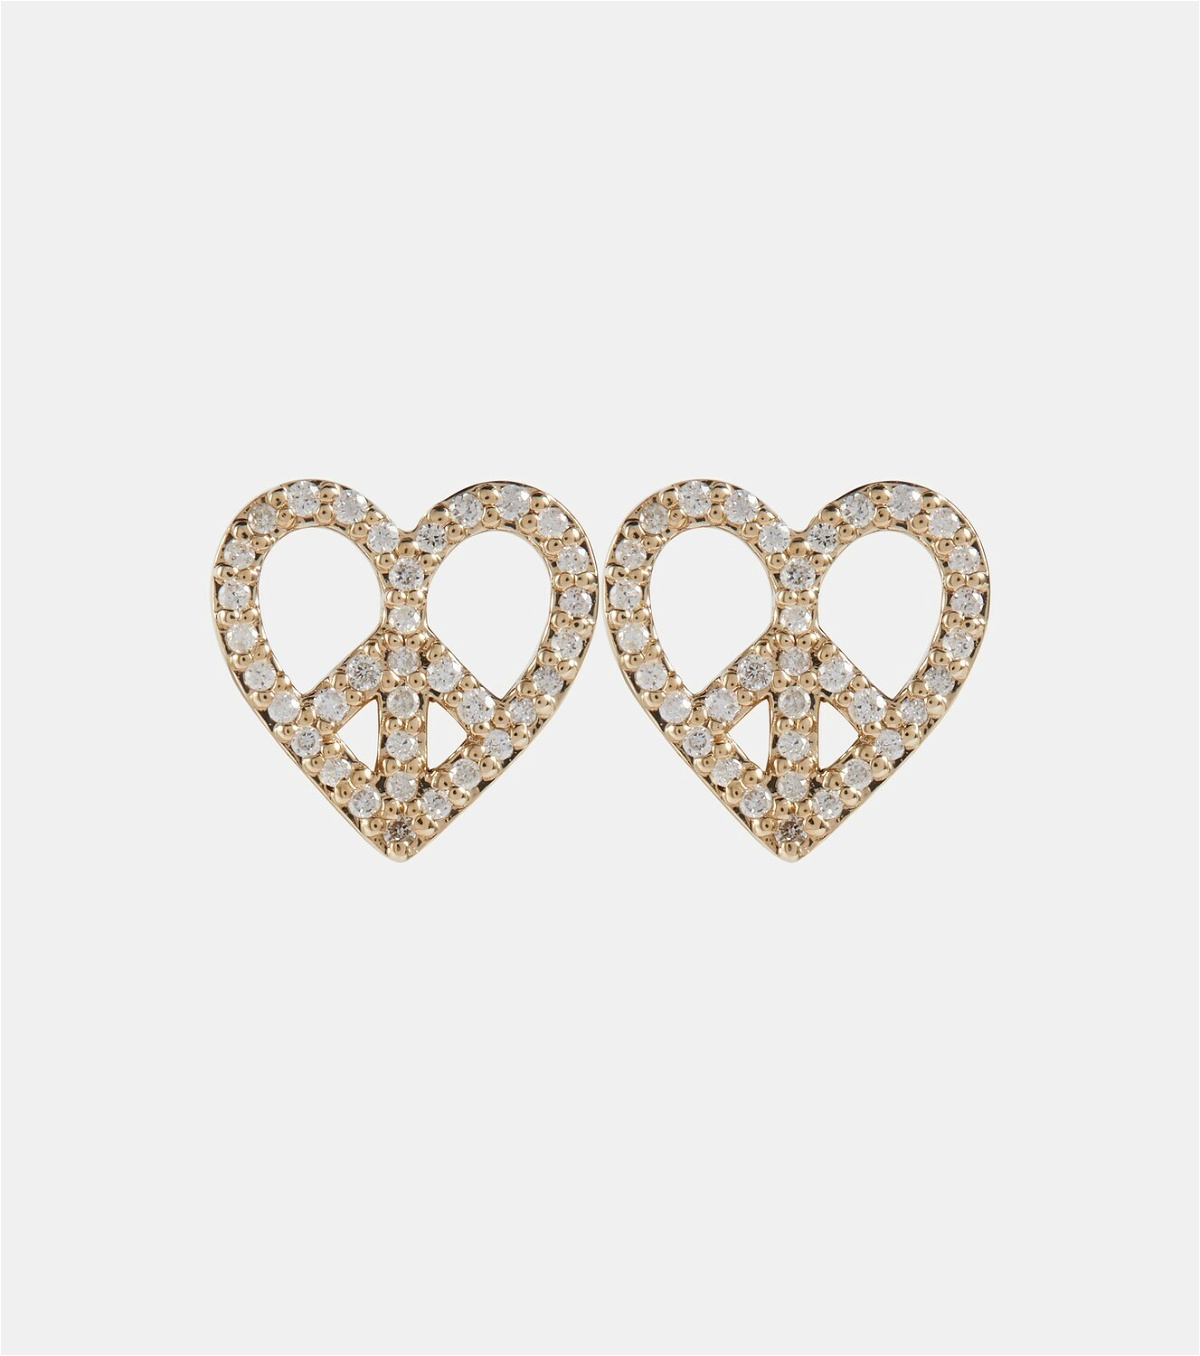 Sydney Evan Peace Heart 14kt gold earrings with diamonds